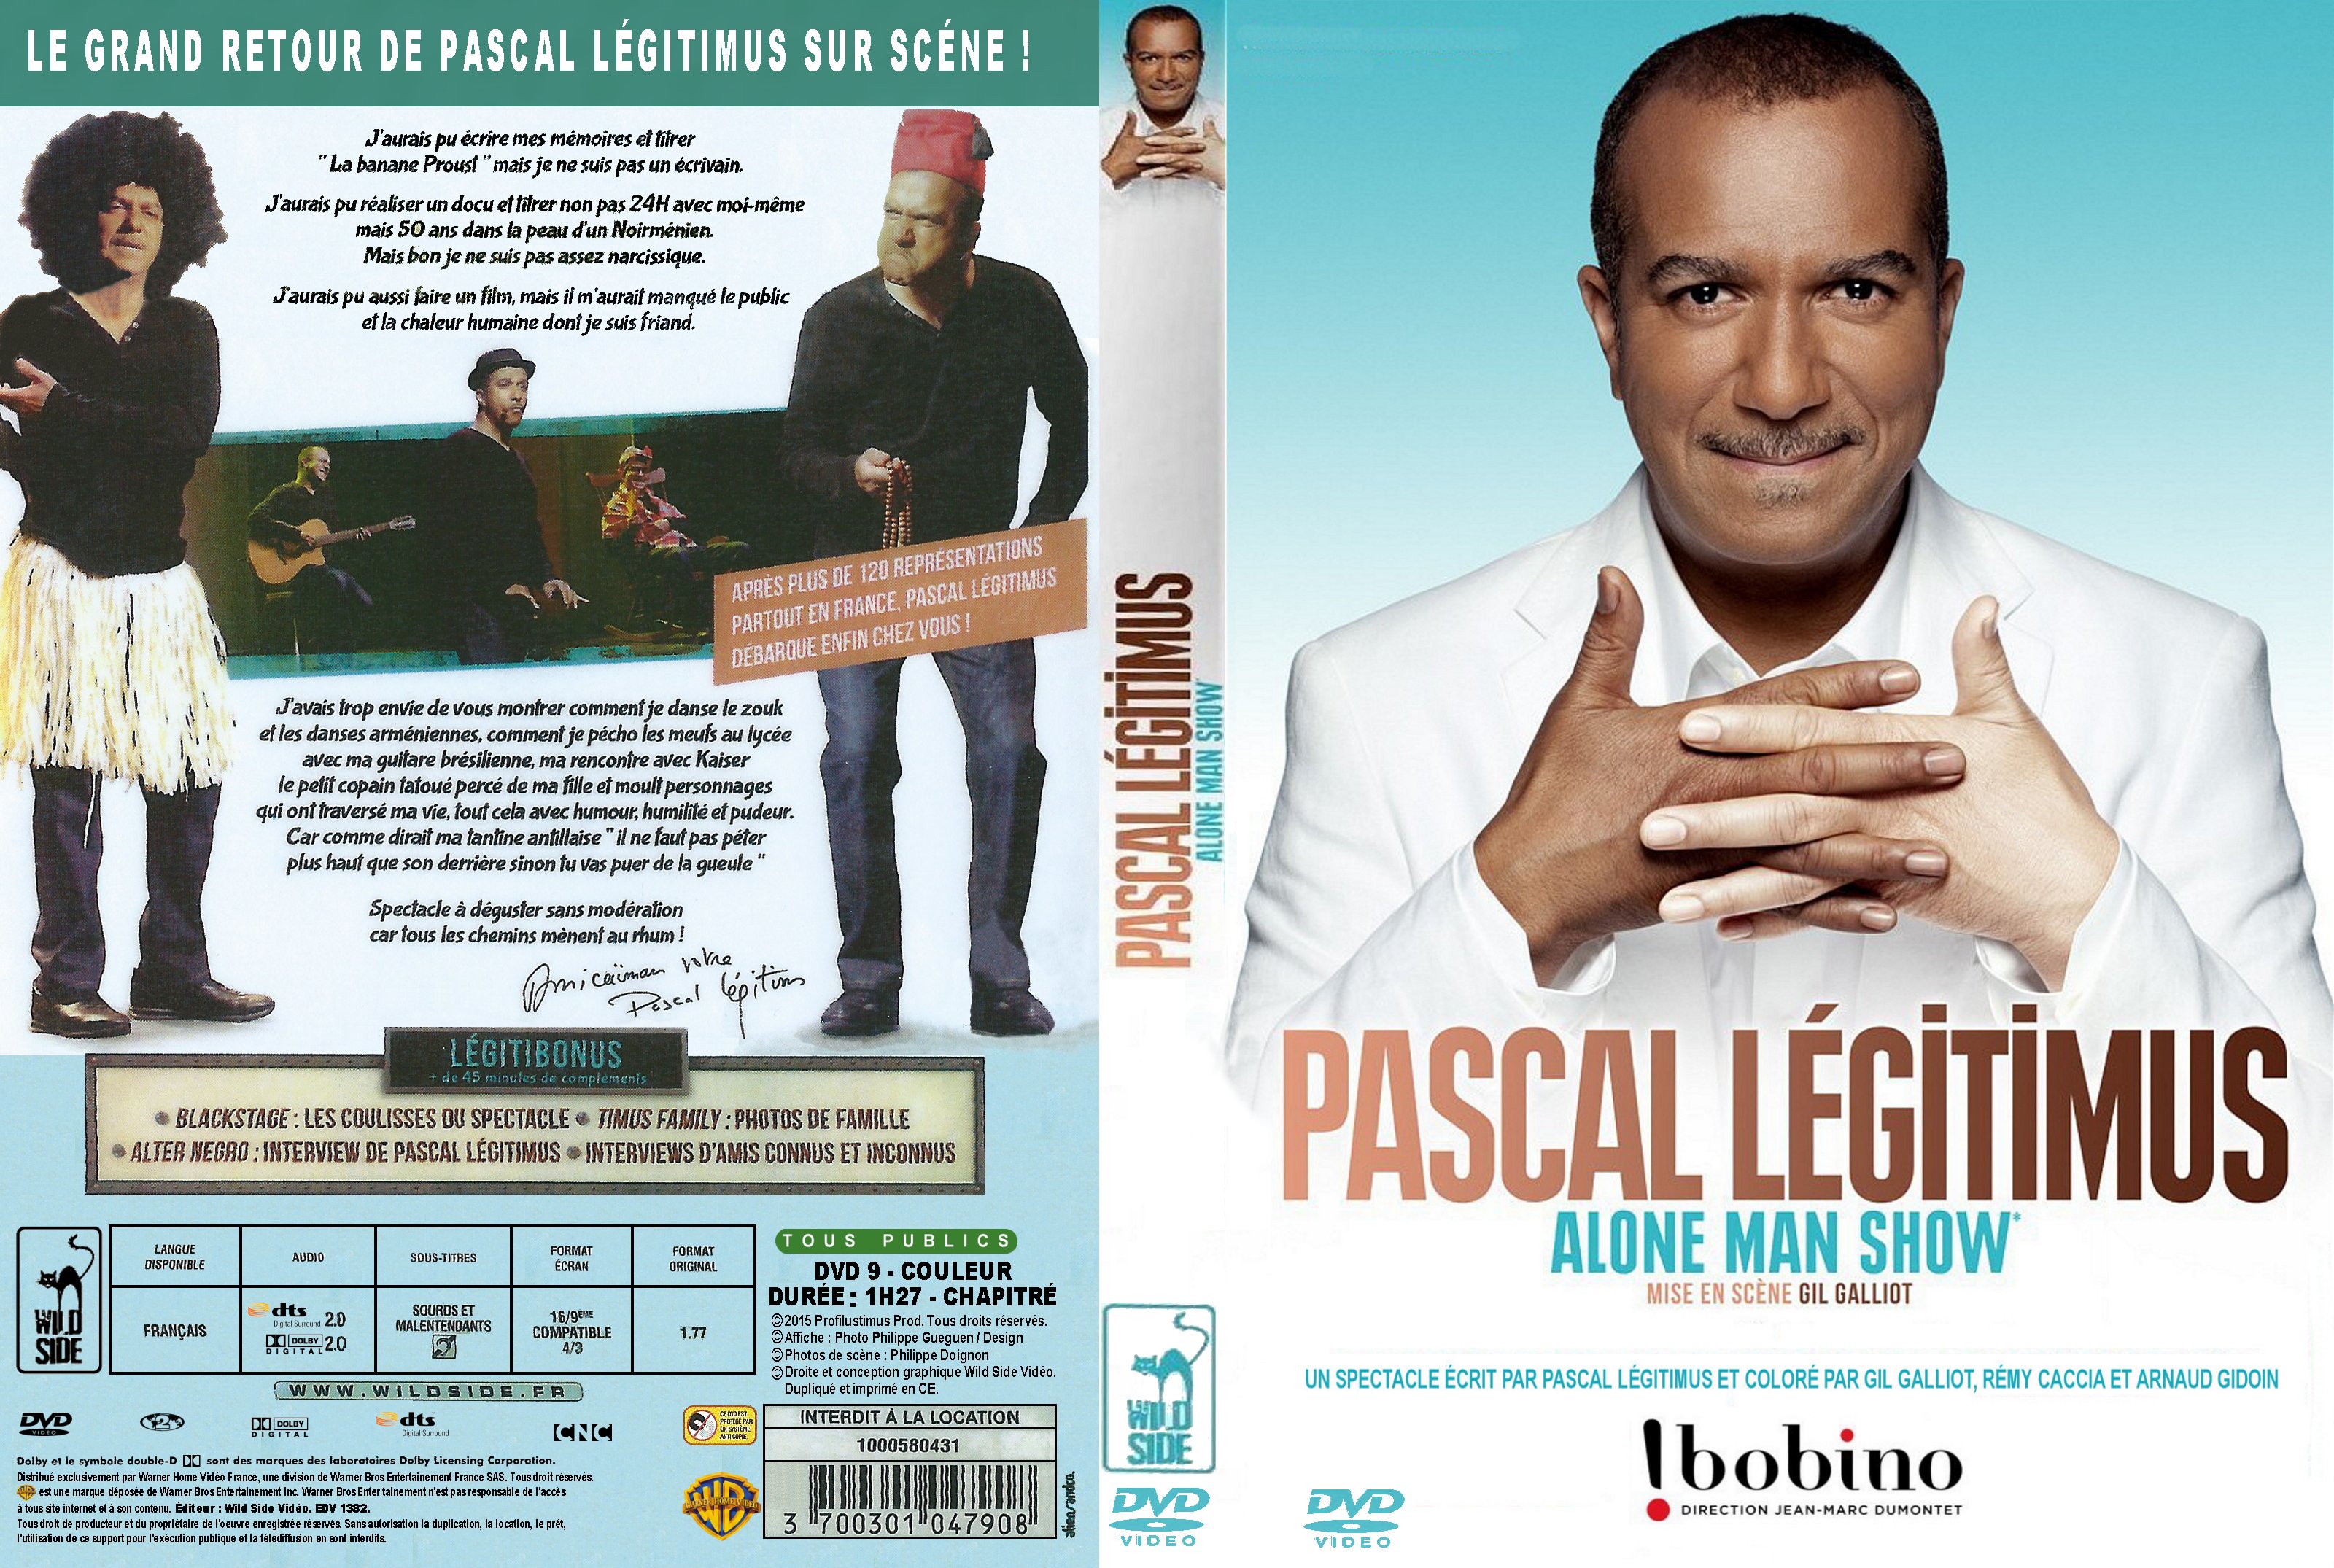 Jaquette DVD Pascal Legitimus Alone Man Show